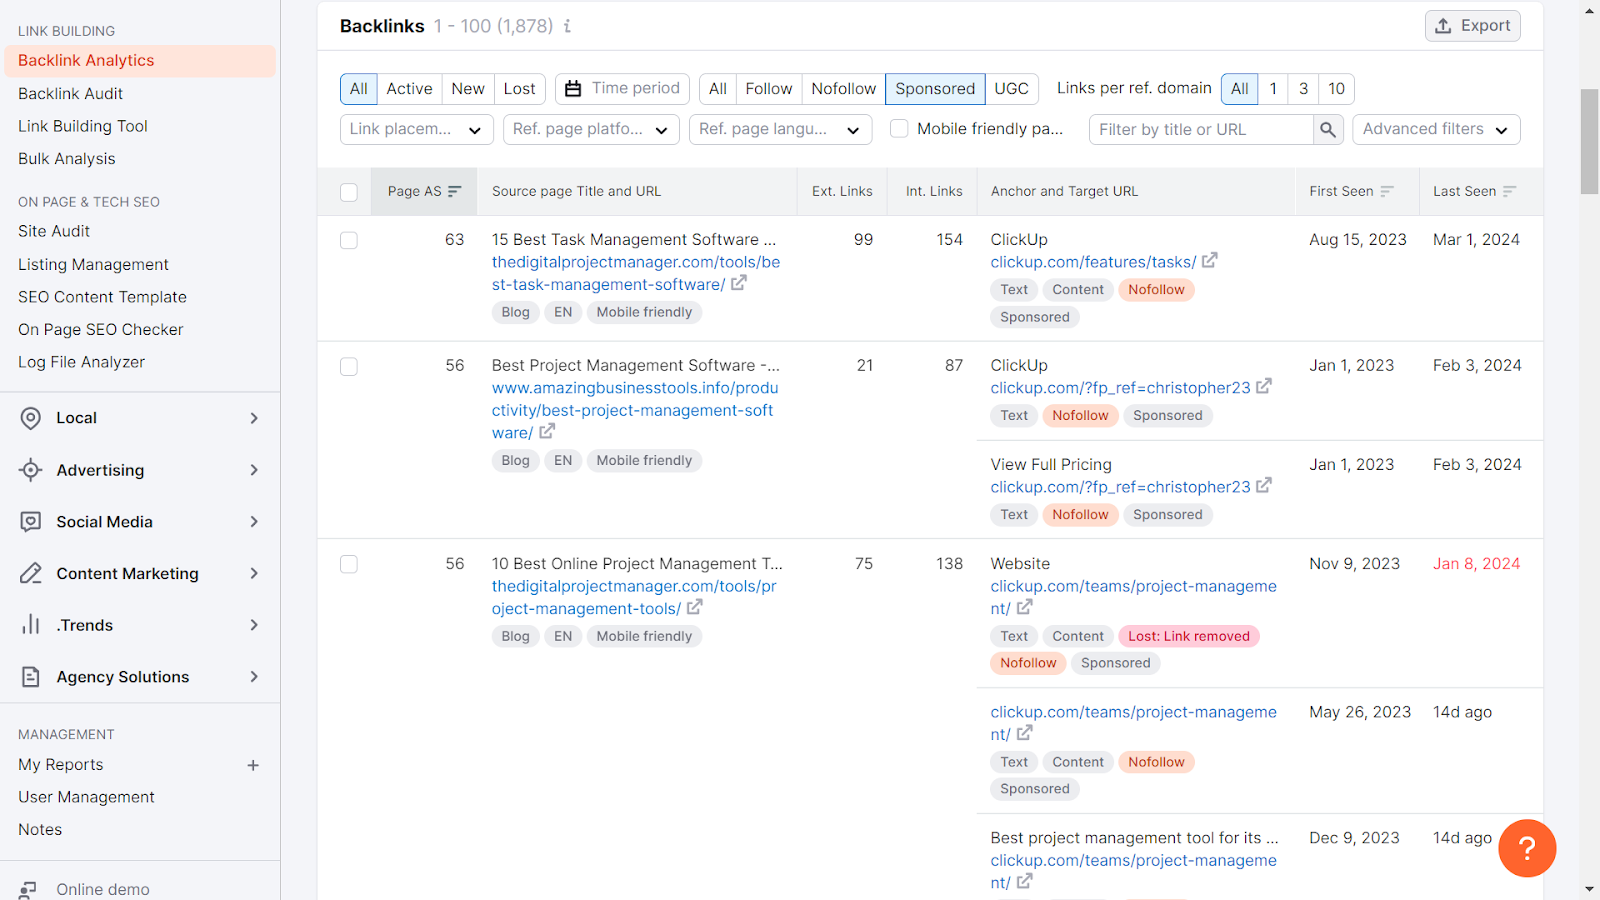 Screenshot showing a website's sponsored links identified through backlink analytics using Semrush.